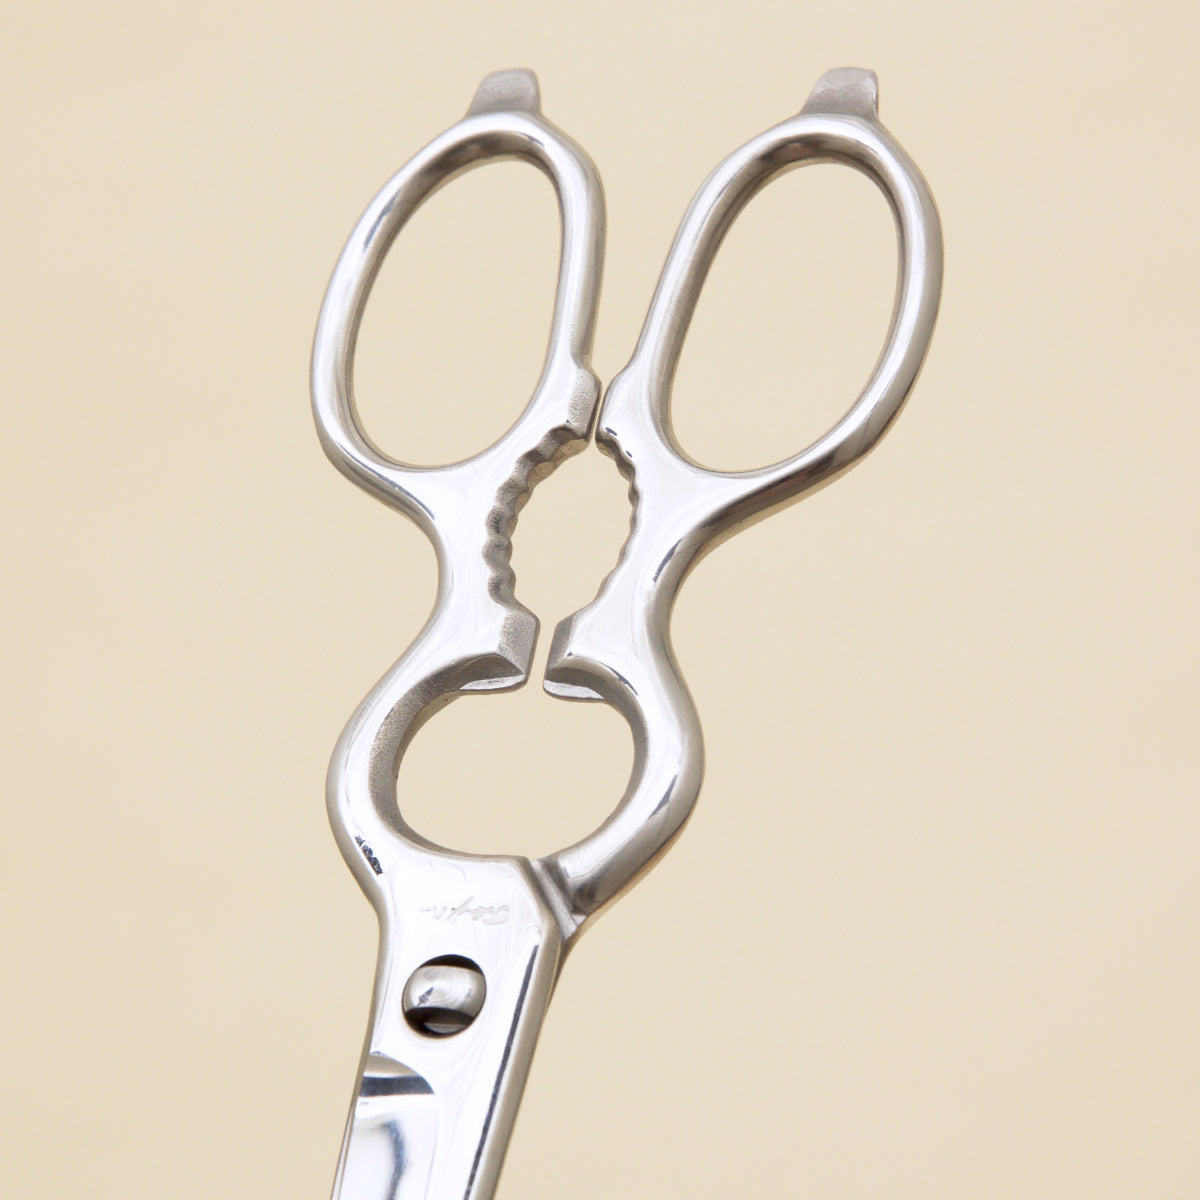 Detachable Kitchen Scissors – The Good Liver